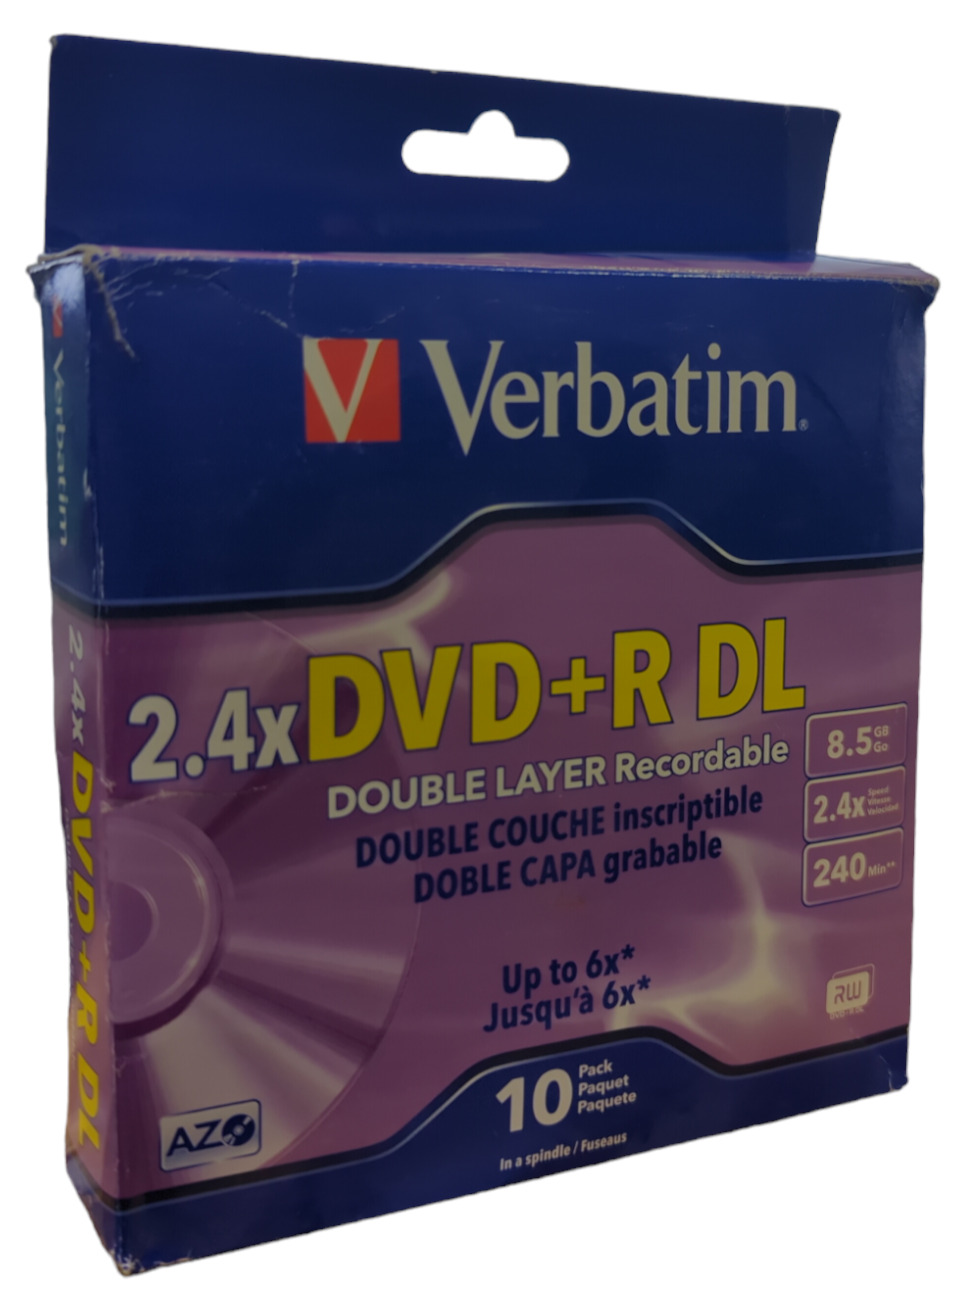 10-pk VERBATIM Dual Layer DVD+R Cakebox - 2.4x 8.5GB 240 mins w AZO Unused